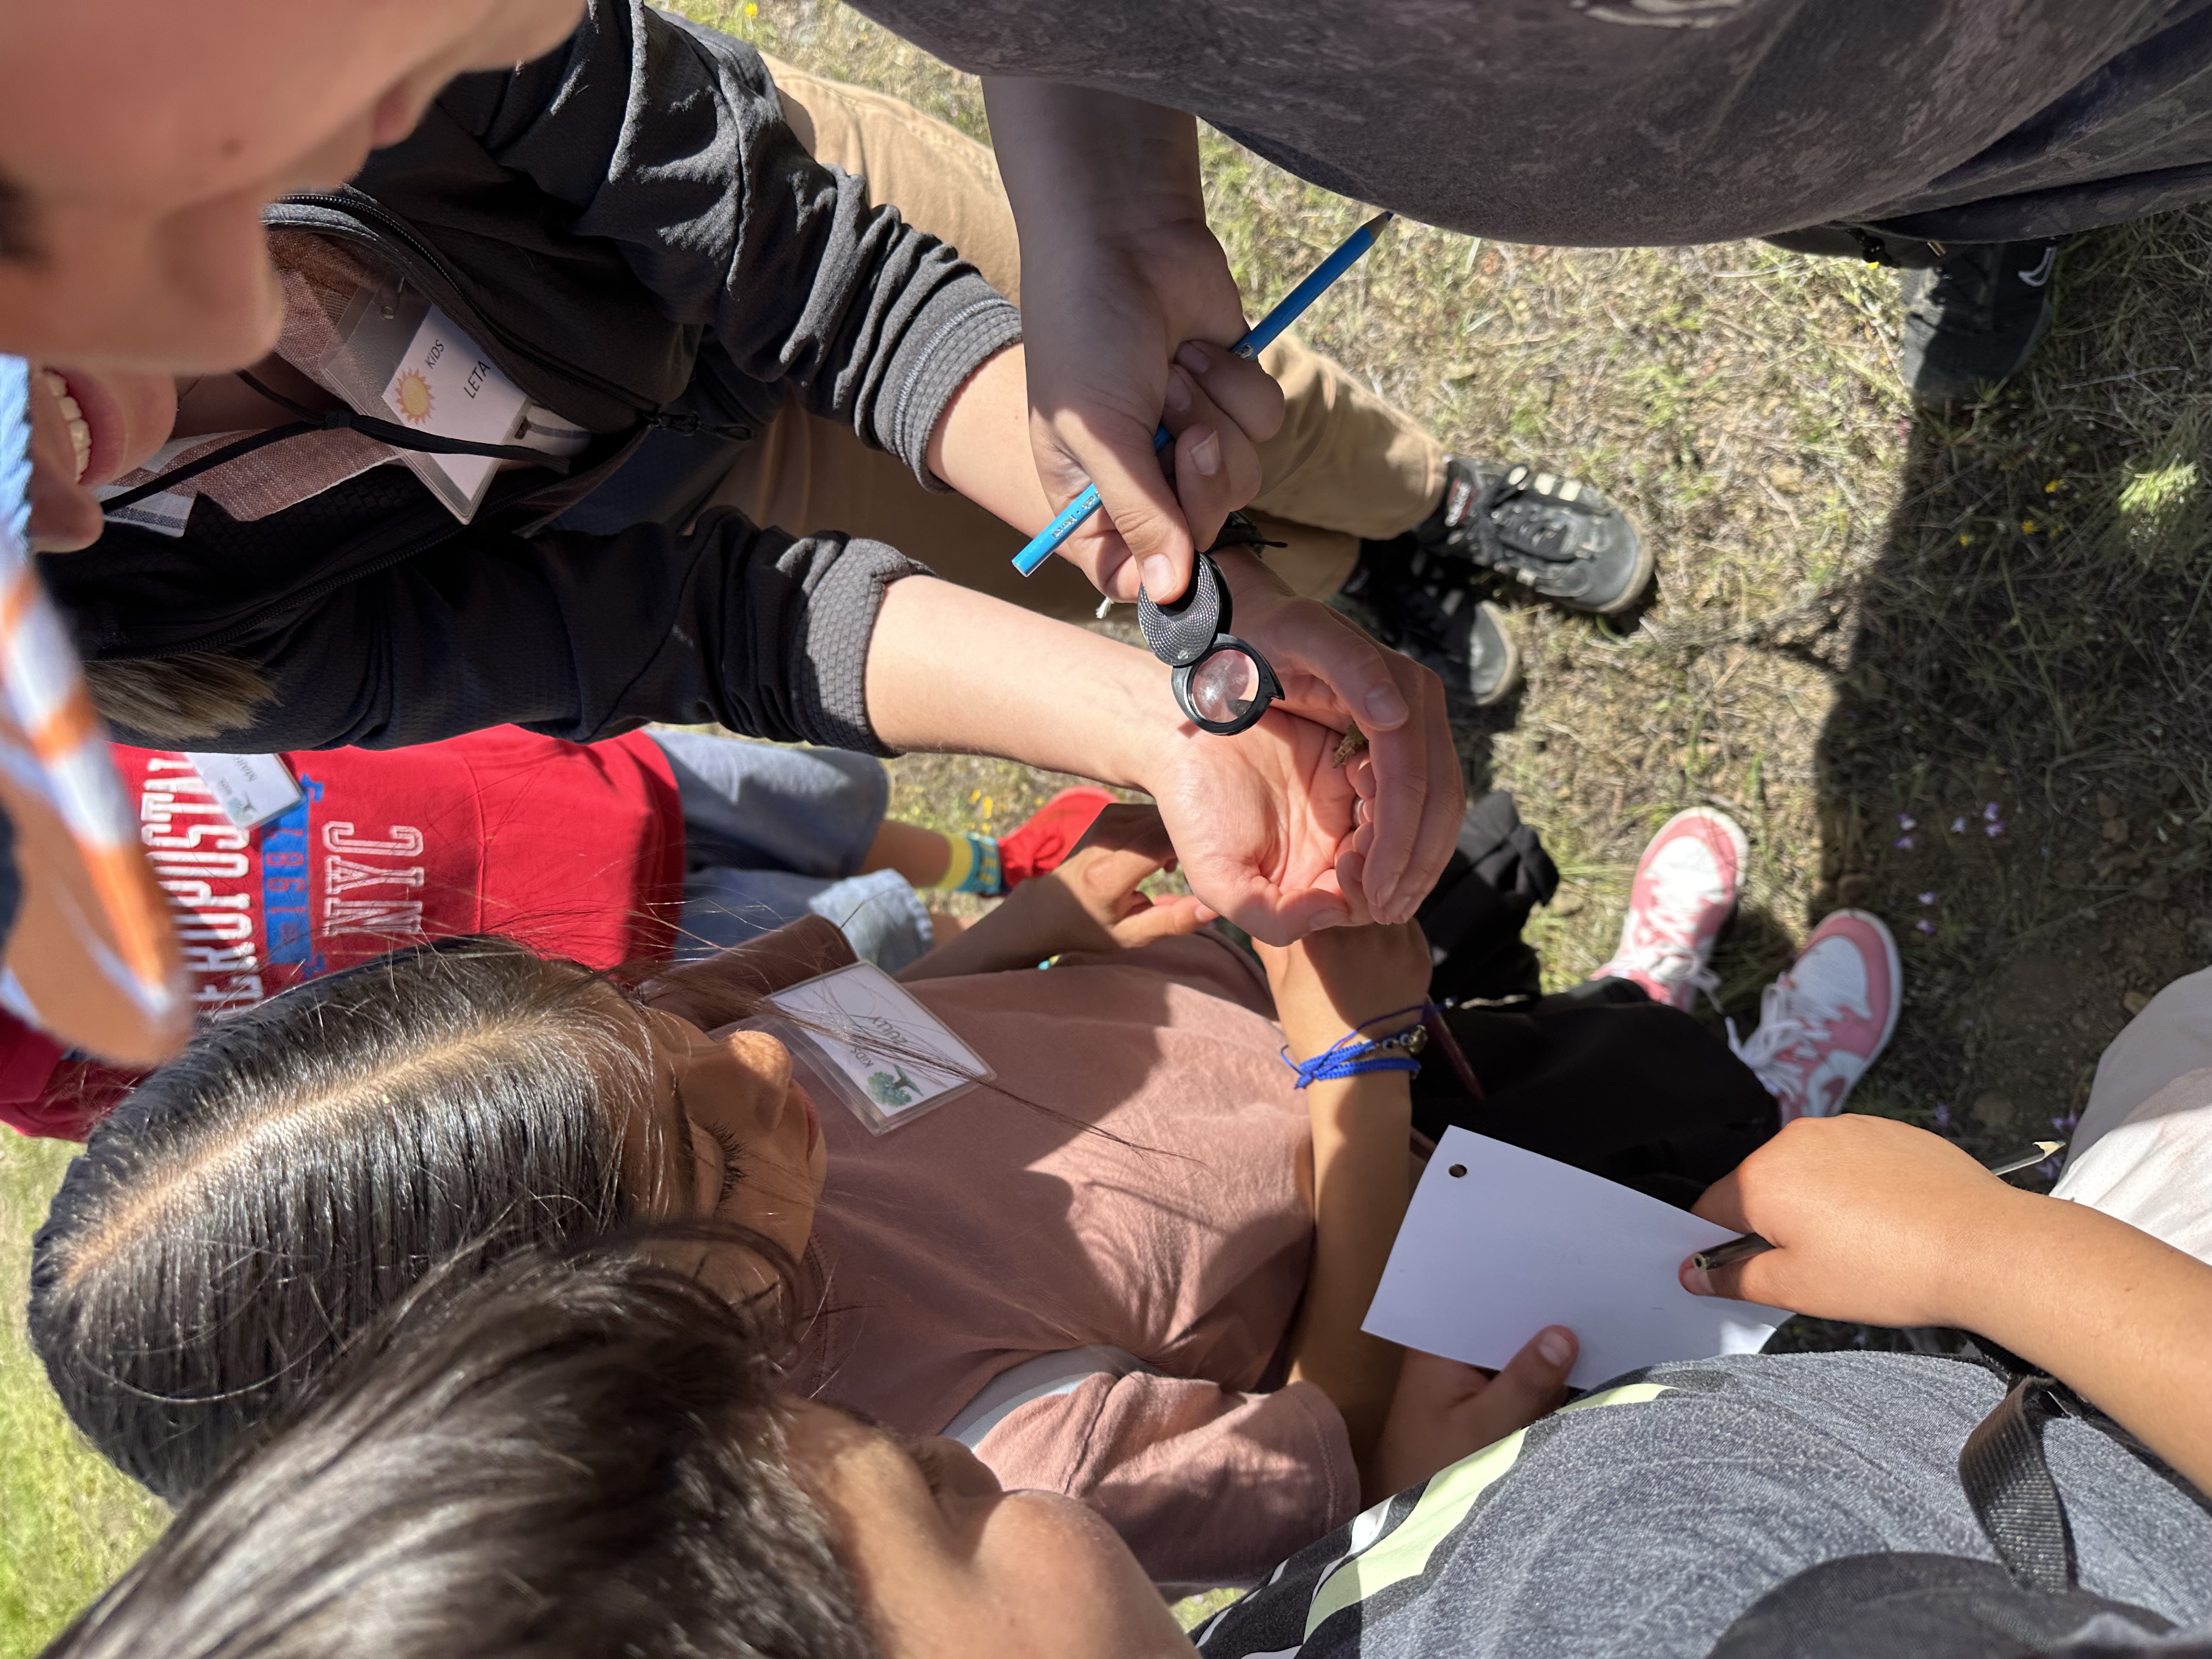 Students examine a bug through a hand lens